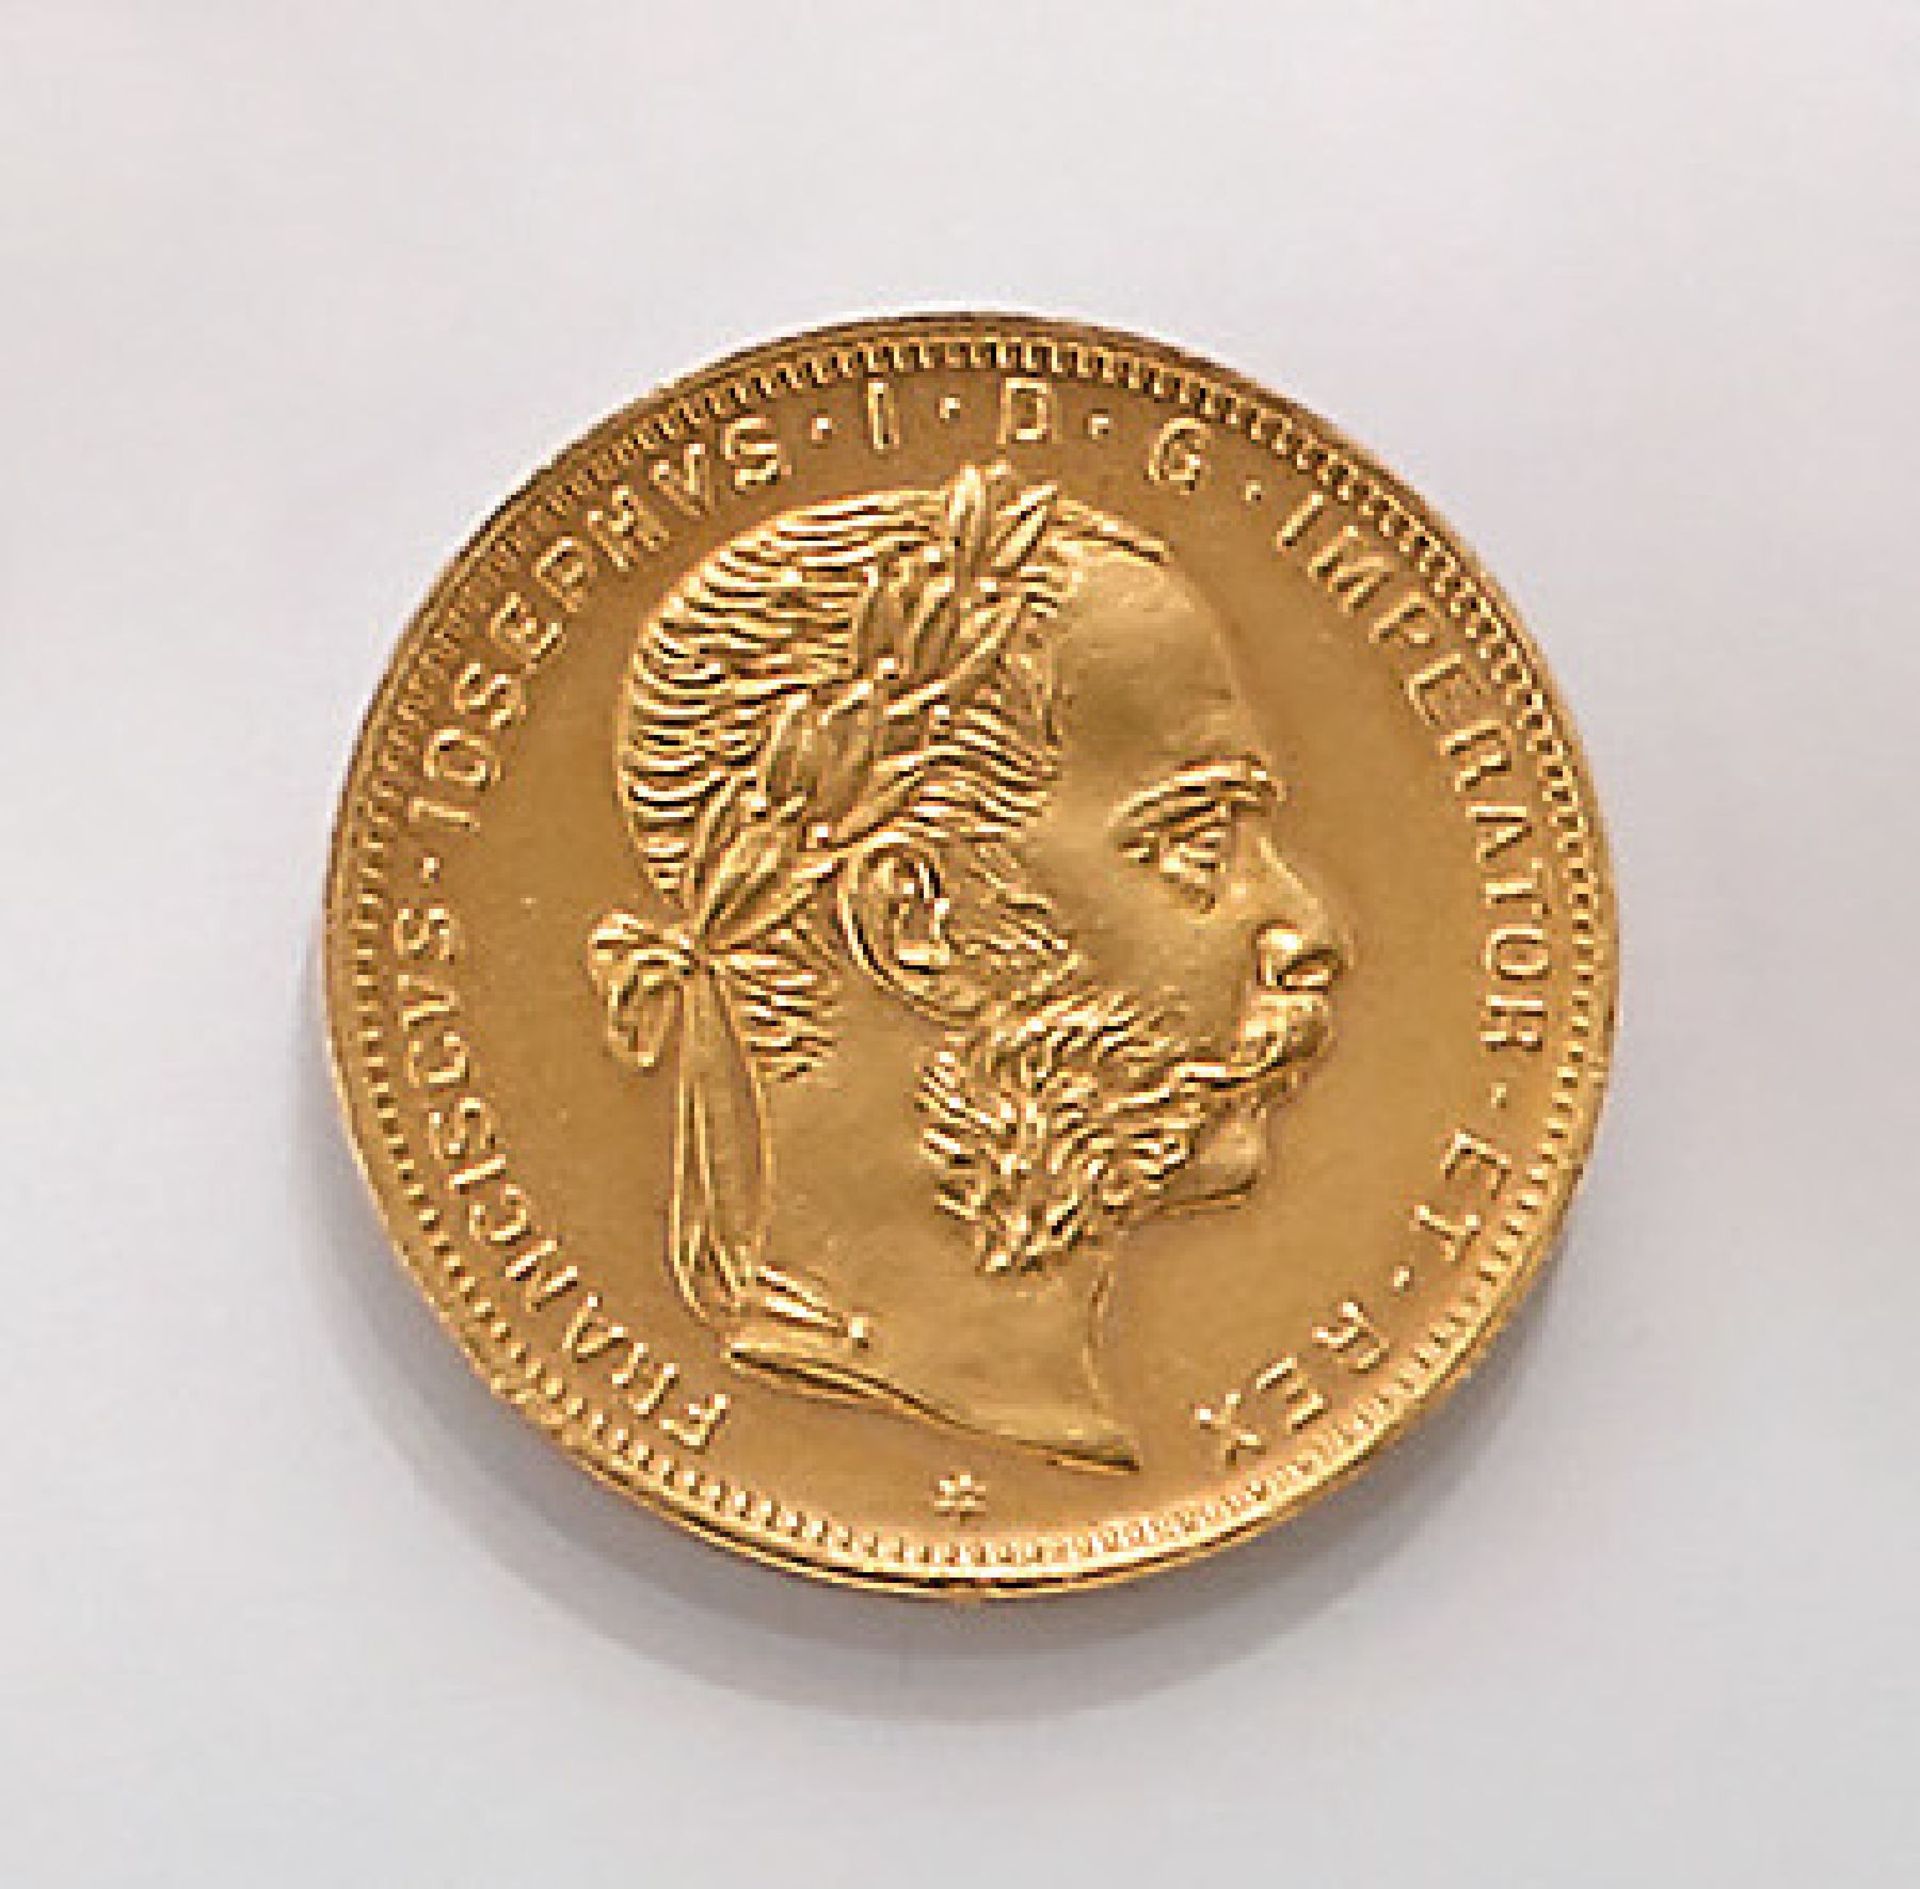 Goldmünze 8 Florin, 20 Franken, Österreich/Ungarn 1892, Franz Joseph I.Gold coin 8 Florin , 20 Swiss